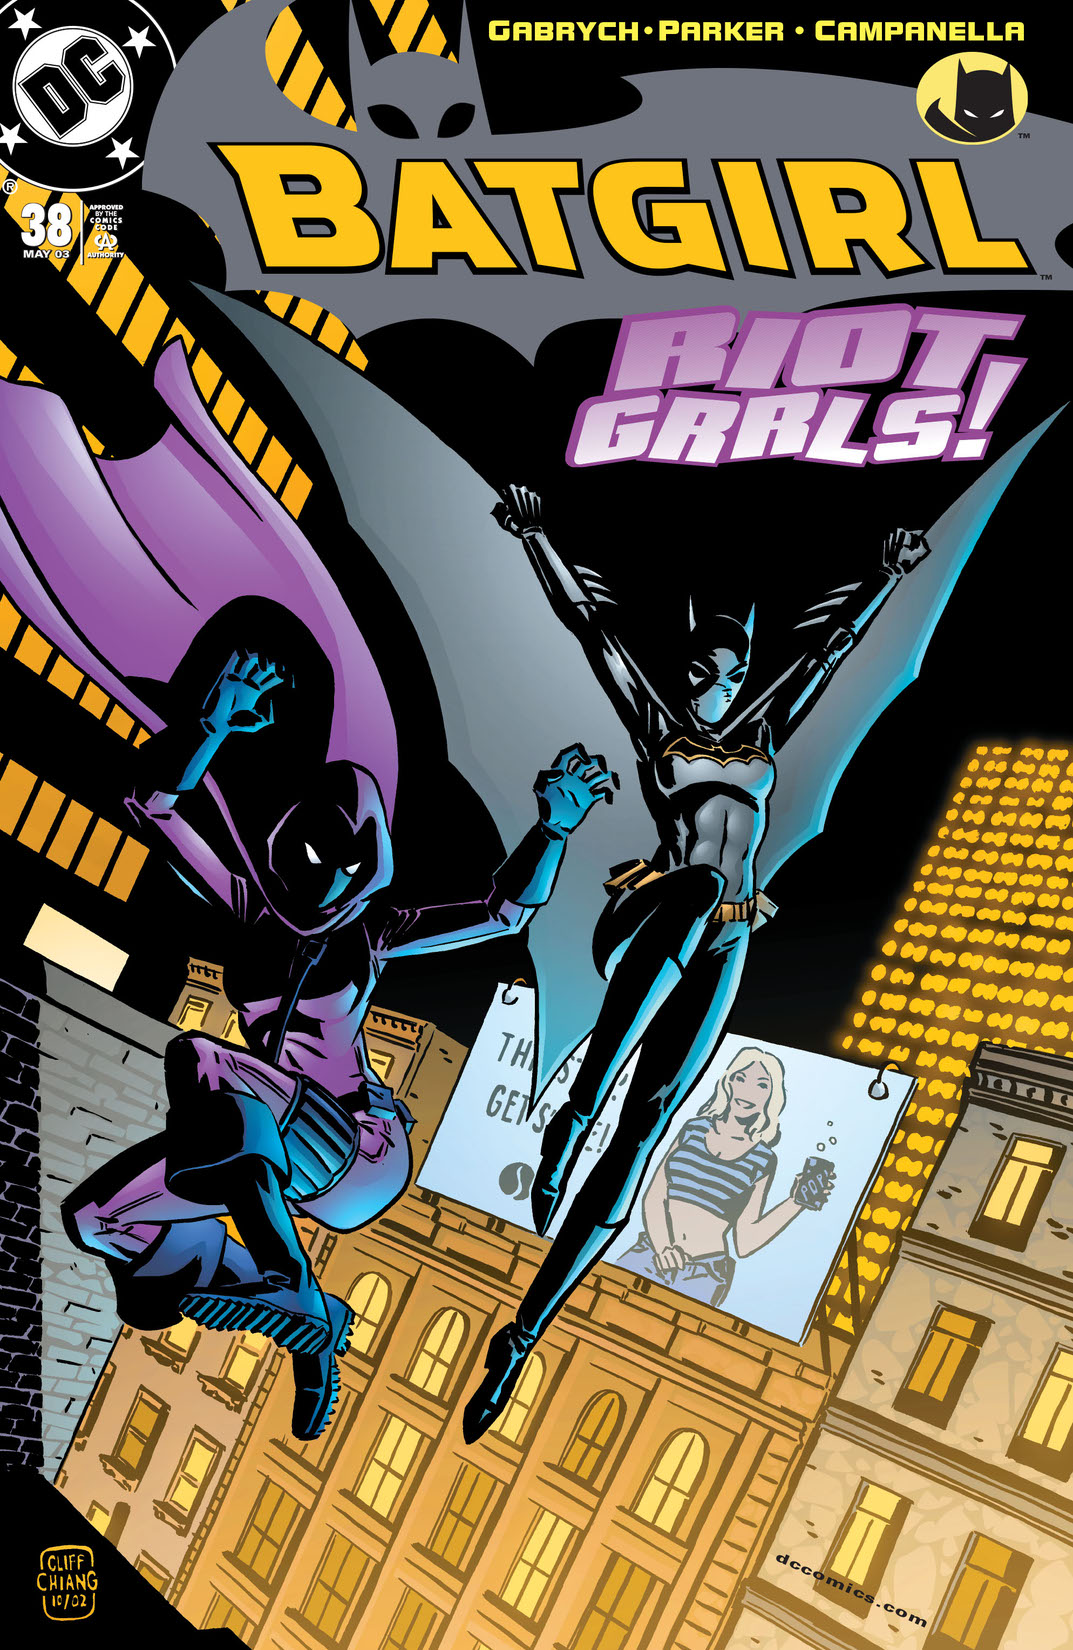 Batgirl (2000-) #38 preview images